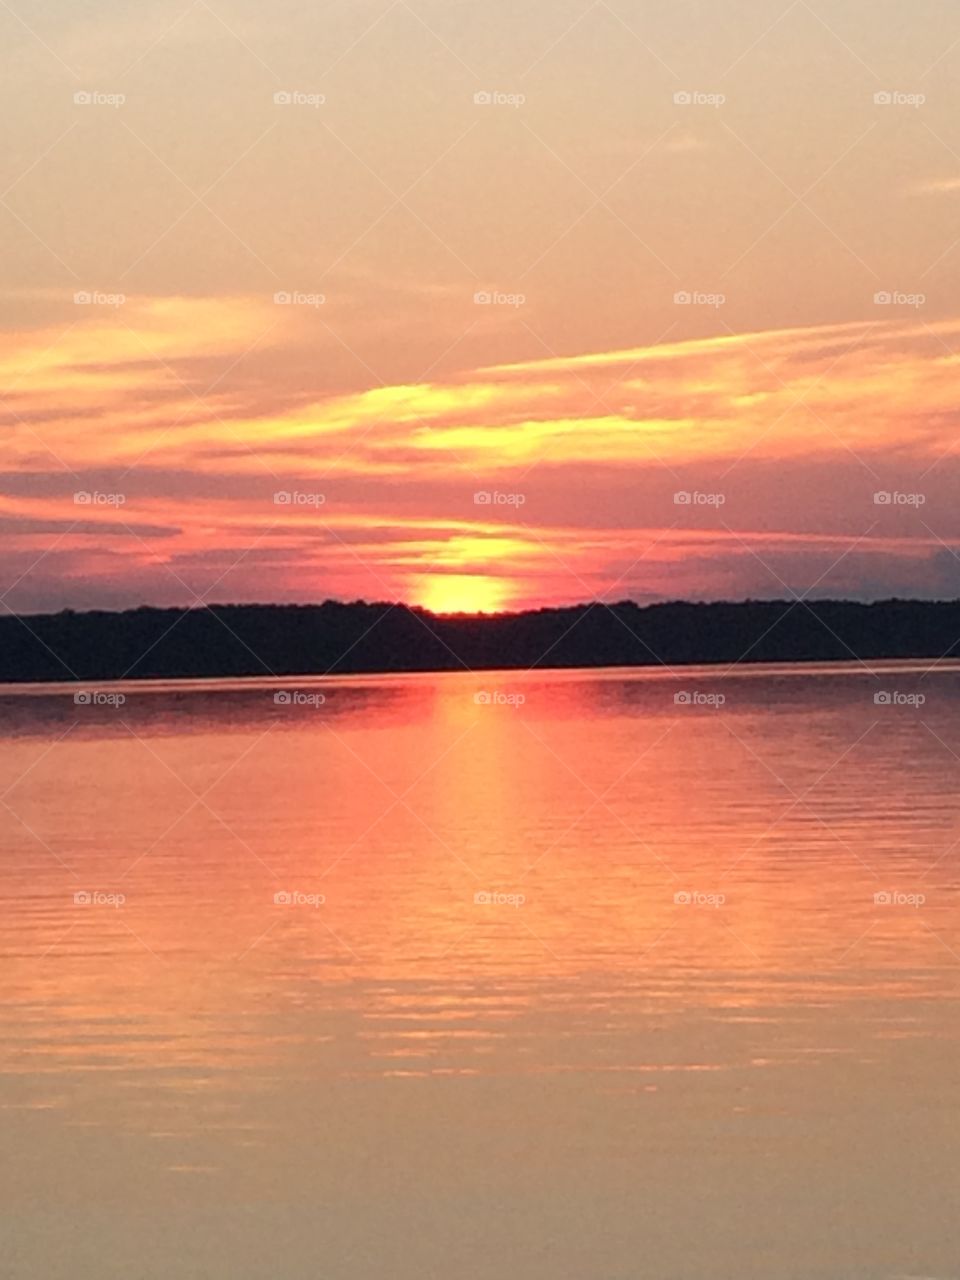 South Carolina sunset 🌅